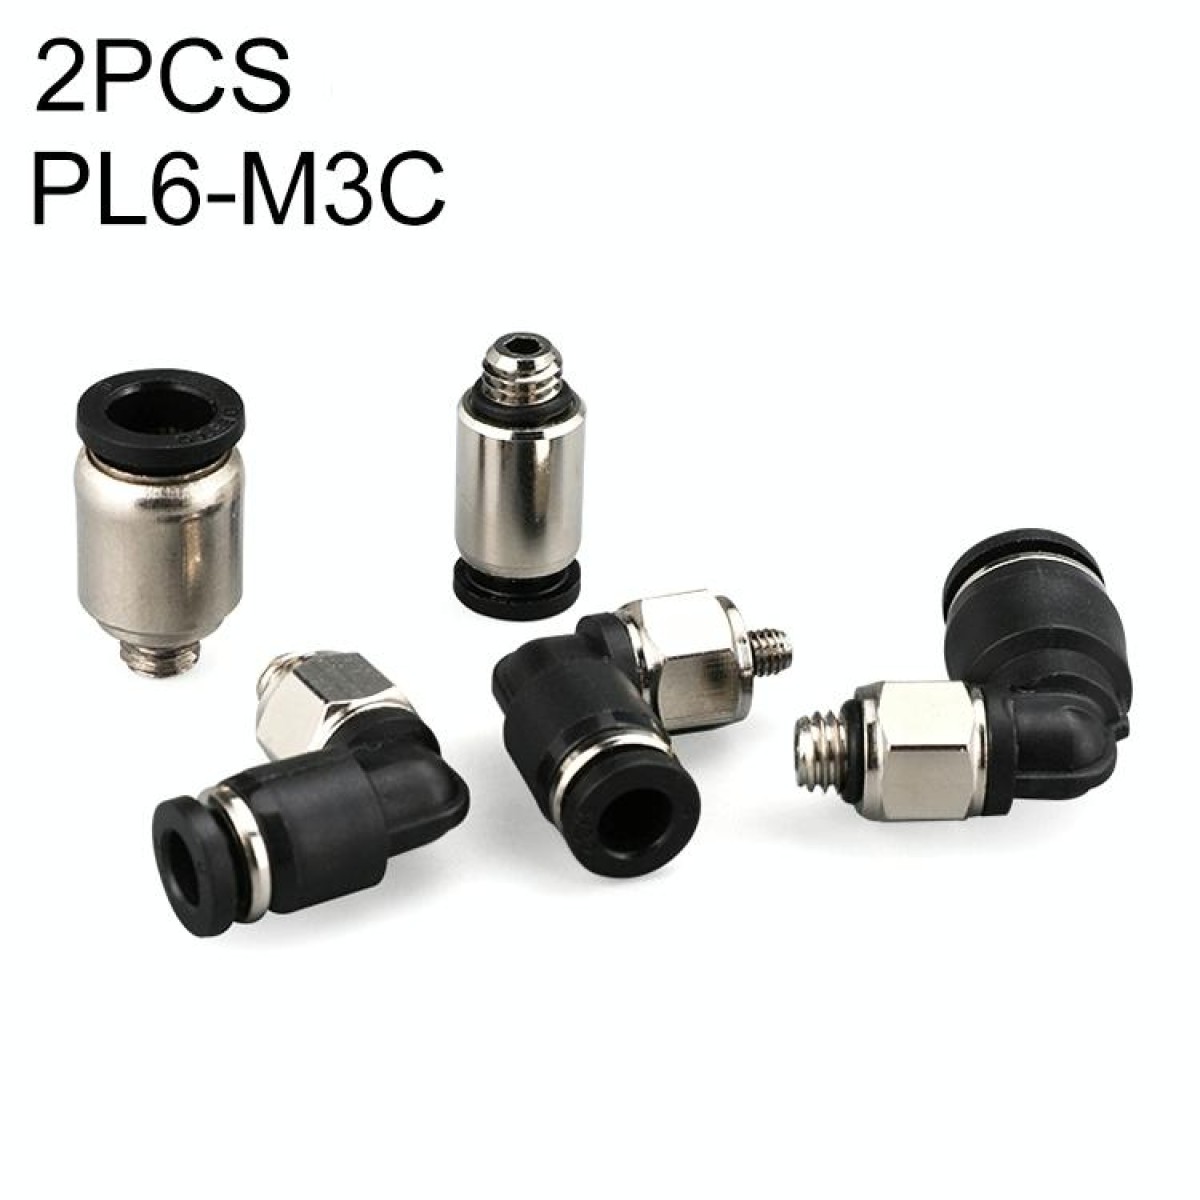 PL6-M3C LAIZE 2pcs Nickel Plated Copper Mini Pneumatic Quick Connector